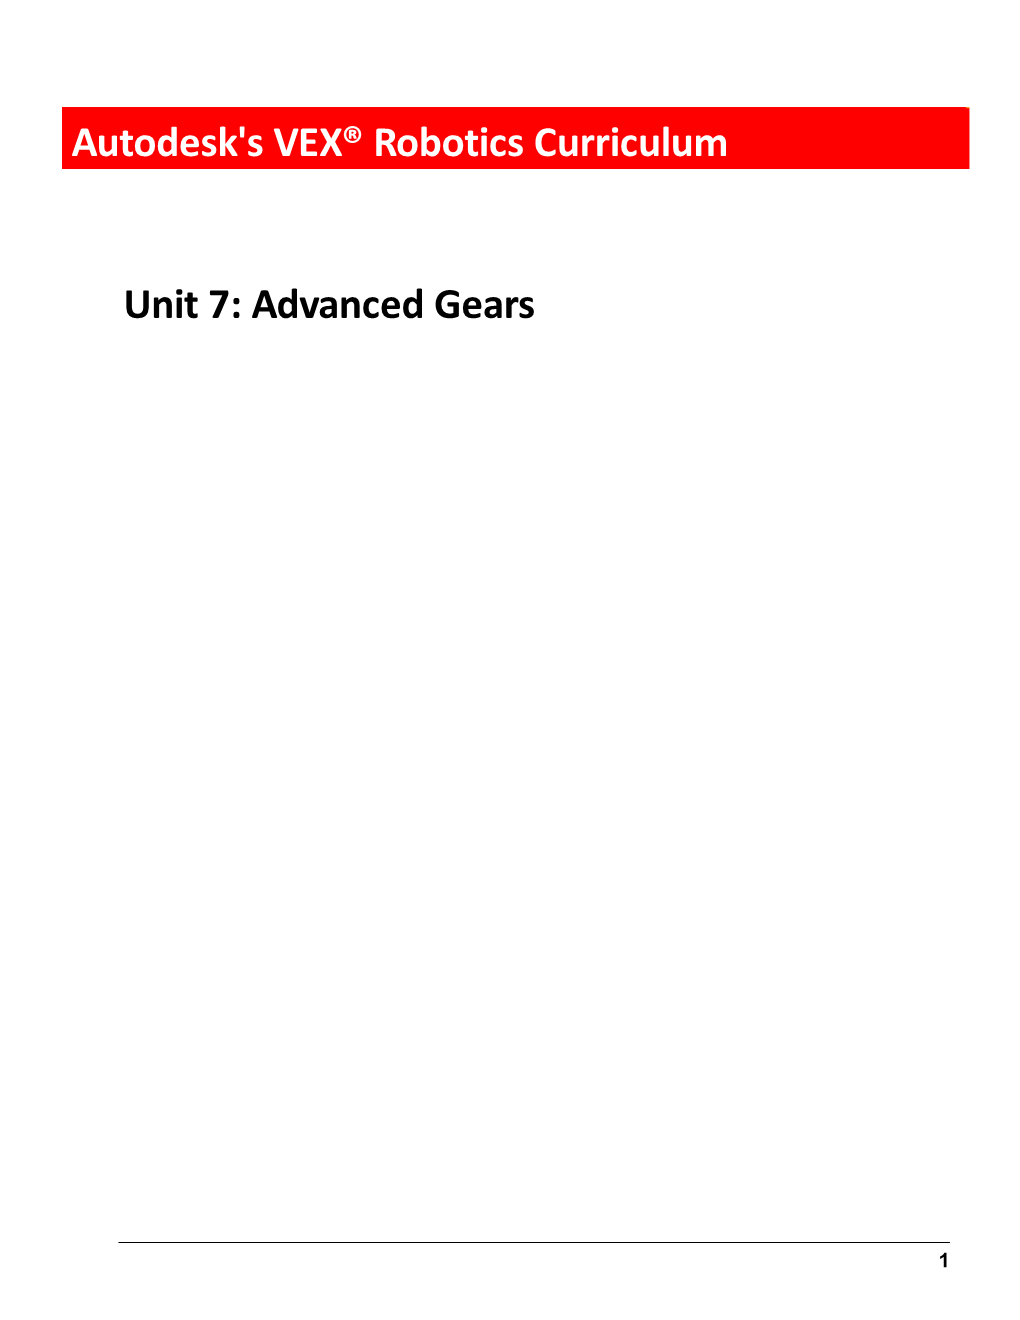 Autodesk's VEX® Robotics Curriculum Unit 7: Advanced Gears